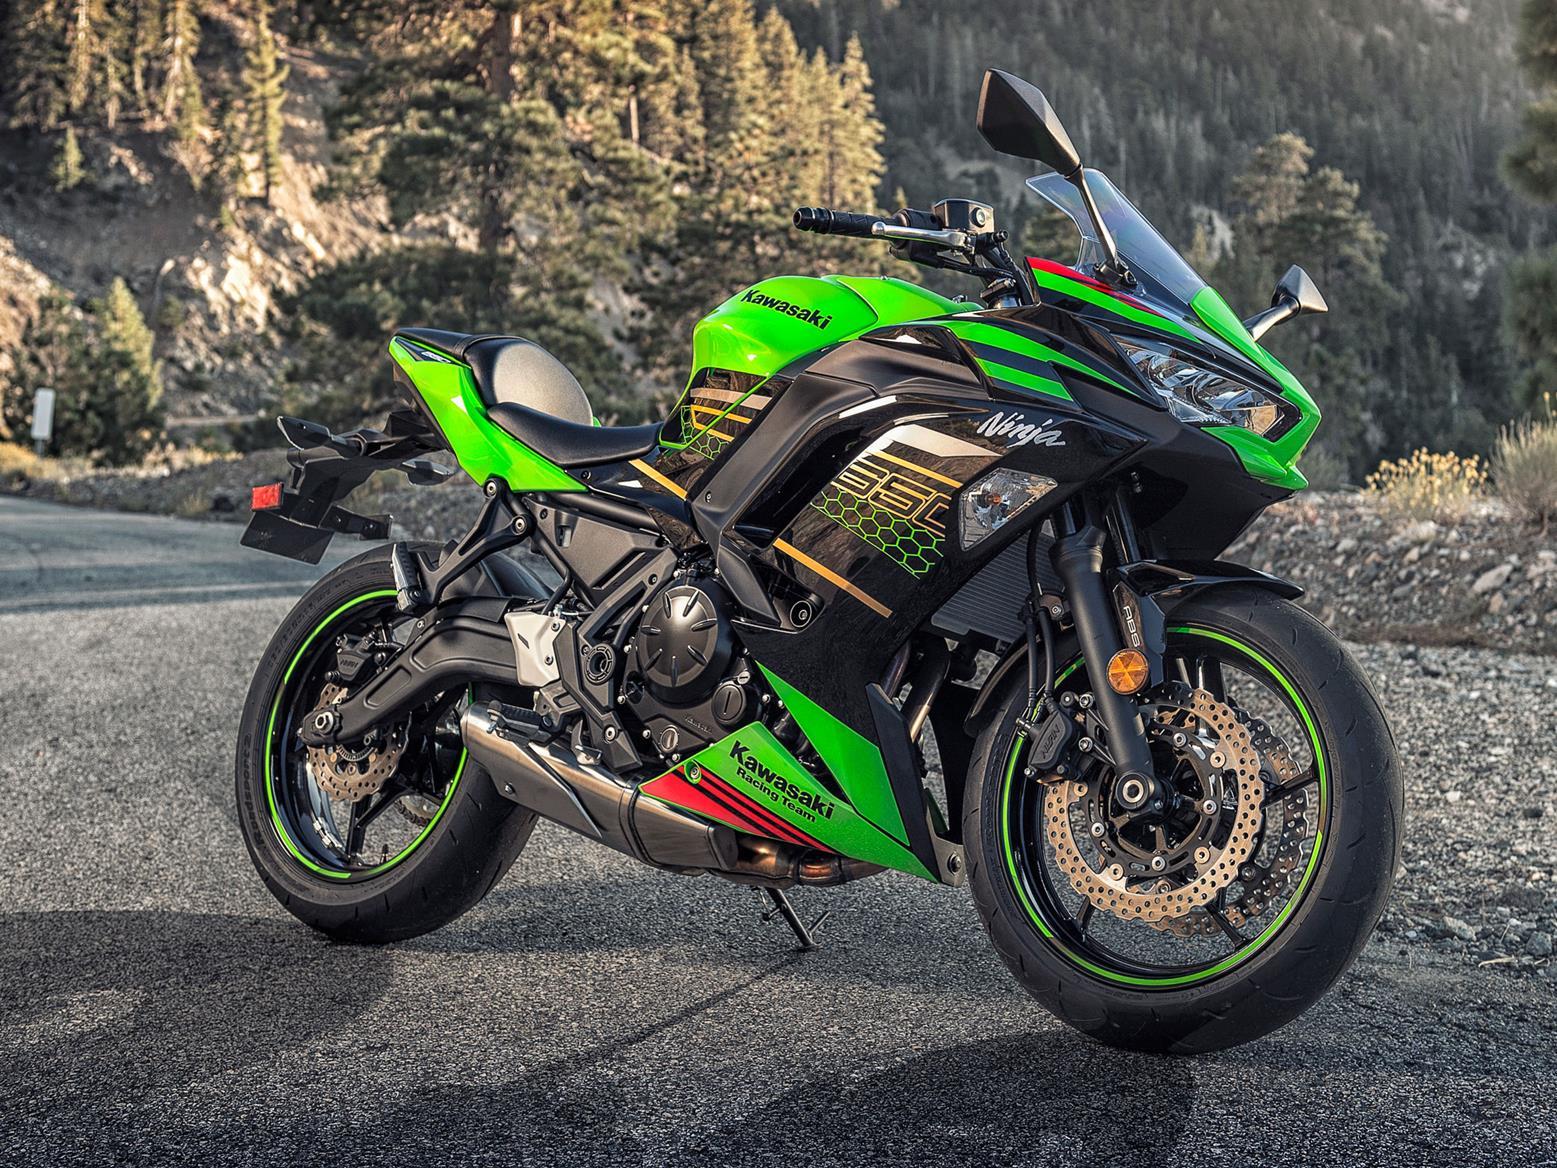 Kawasaki reveal revised 2020 Ninja 650 the latest details